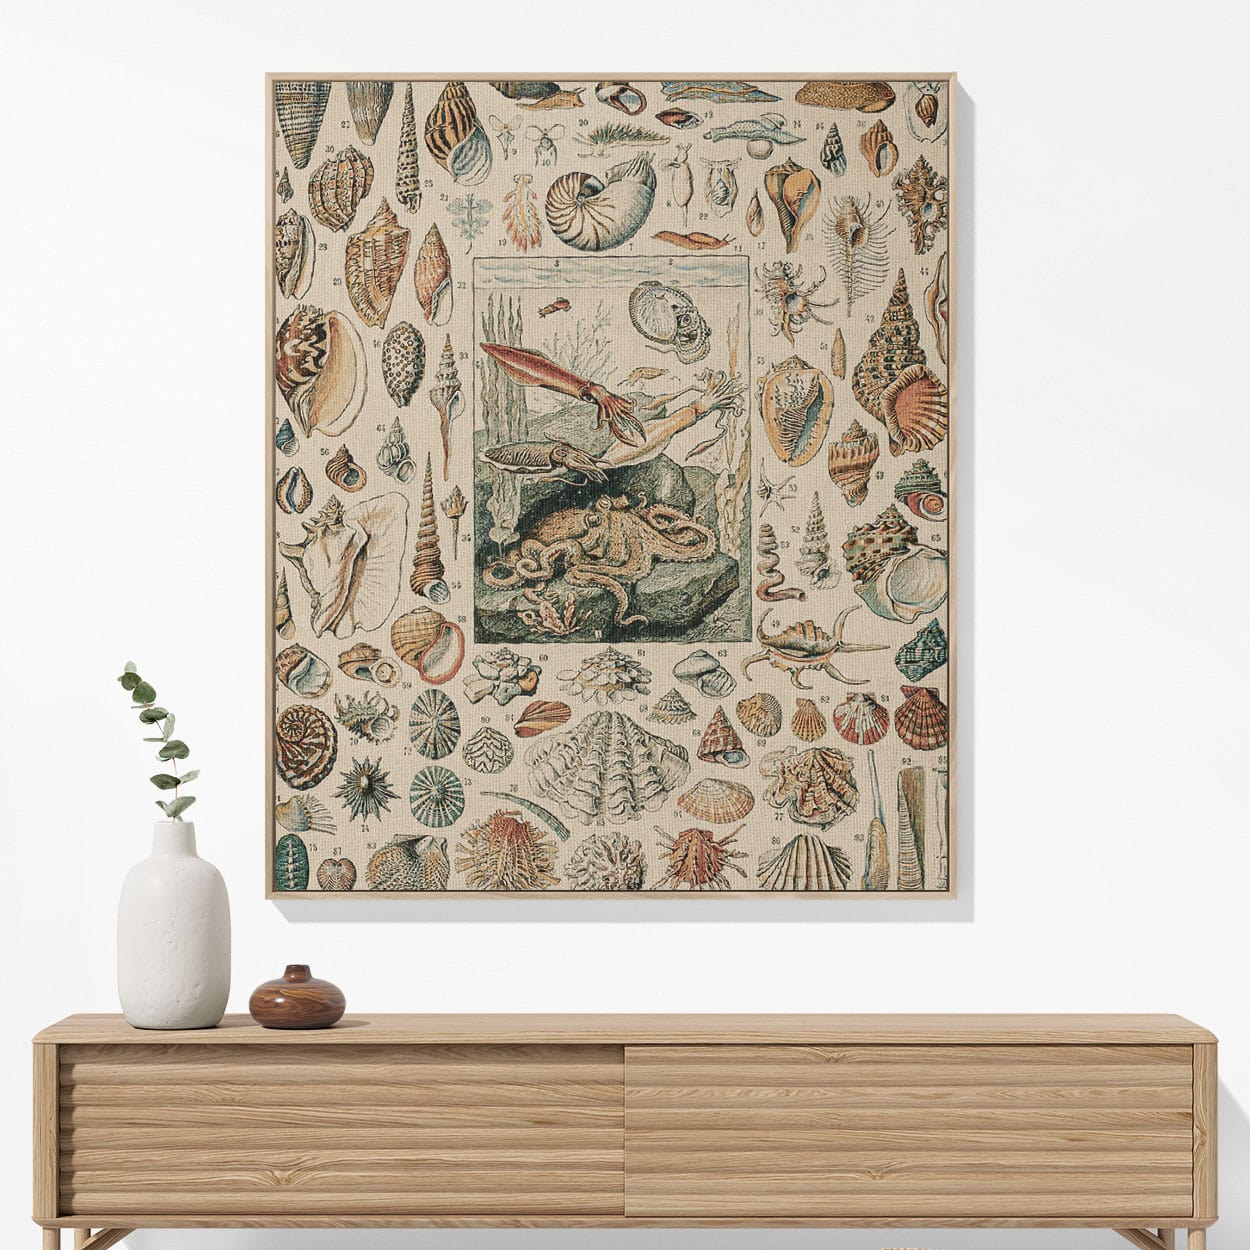 Seashells Woven Blanket Woven Blanket Hanging on a Wall as Framed Wall Art